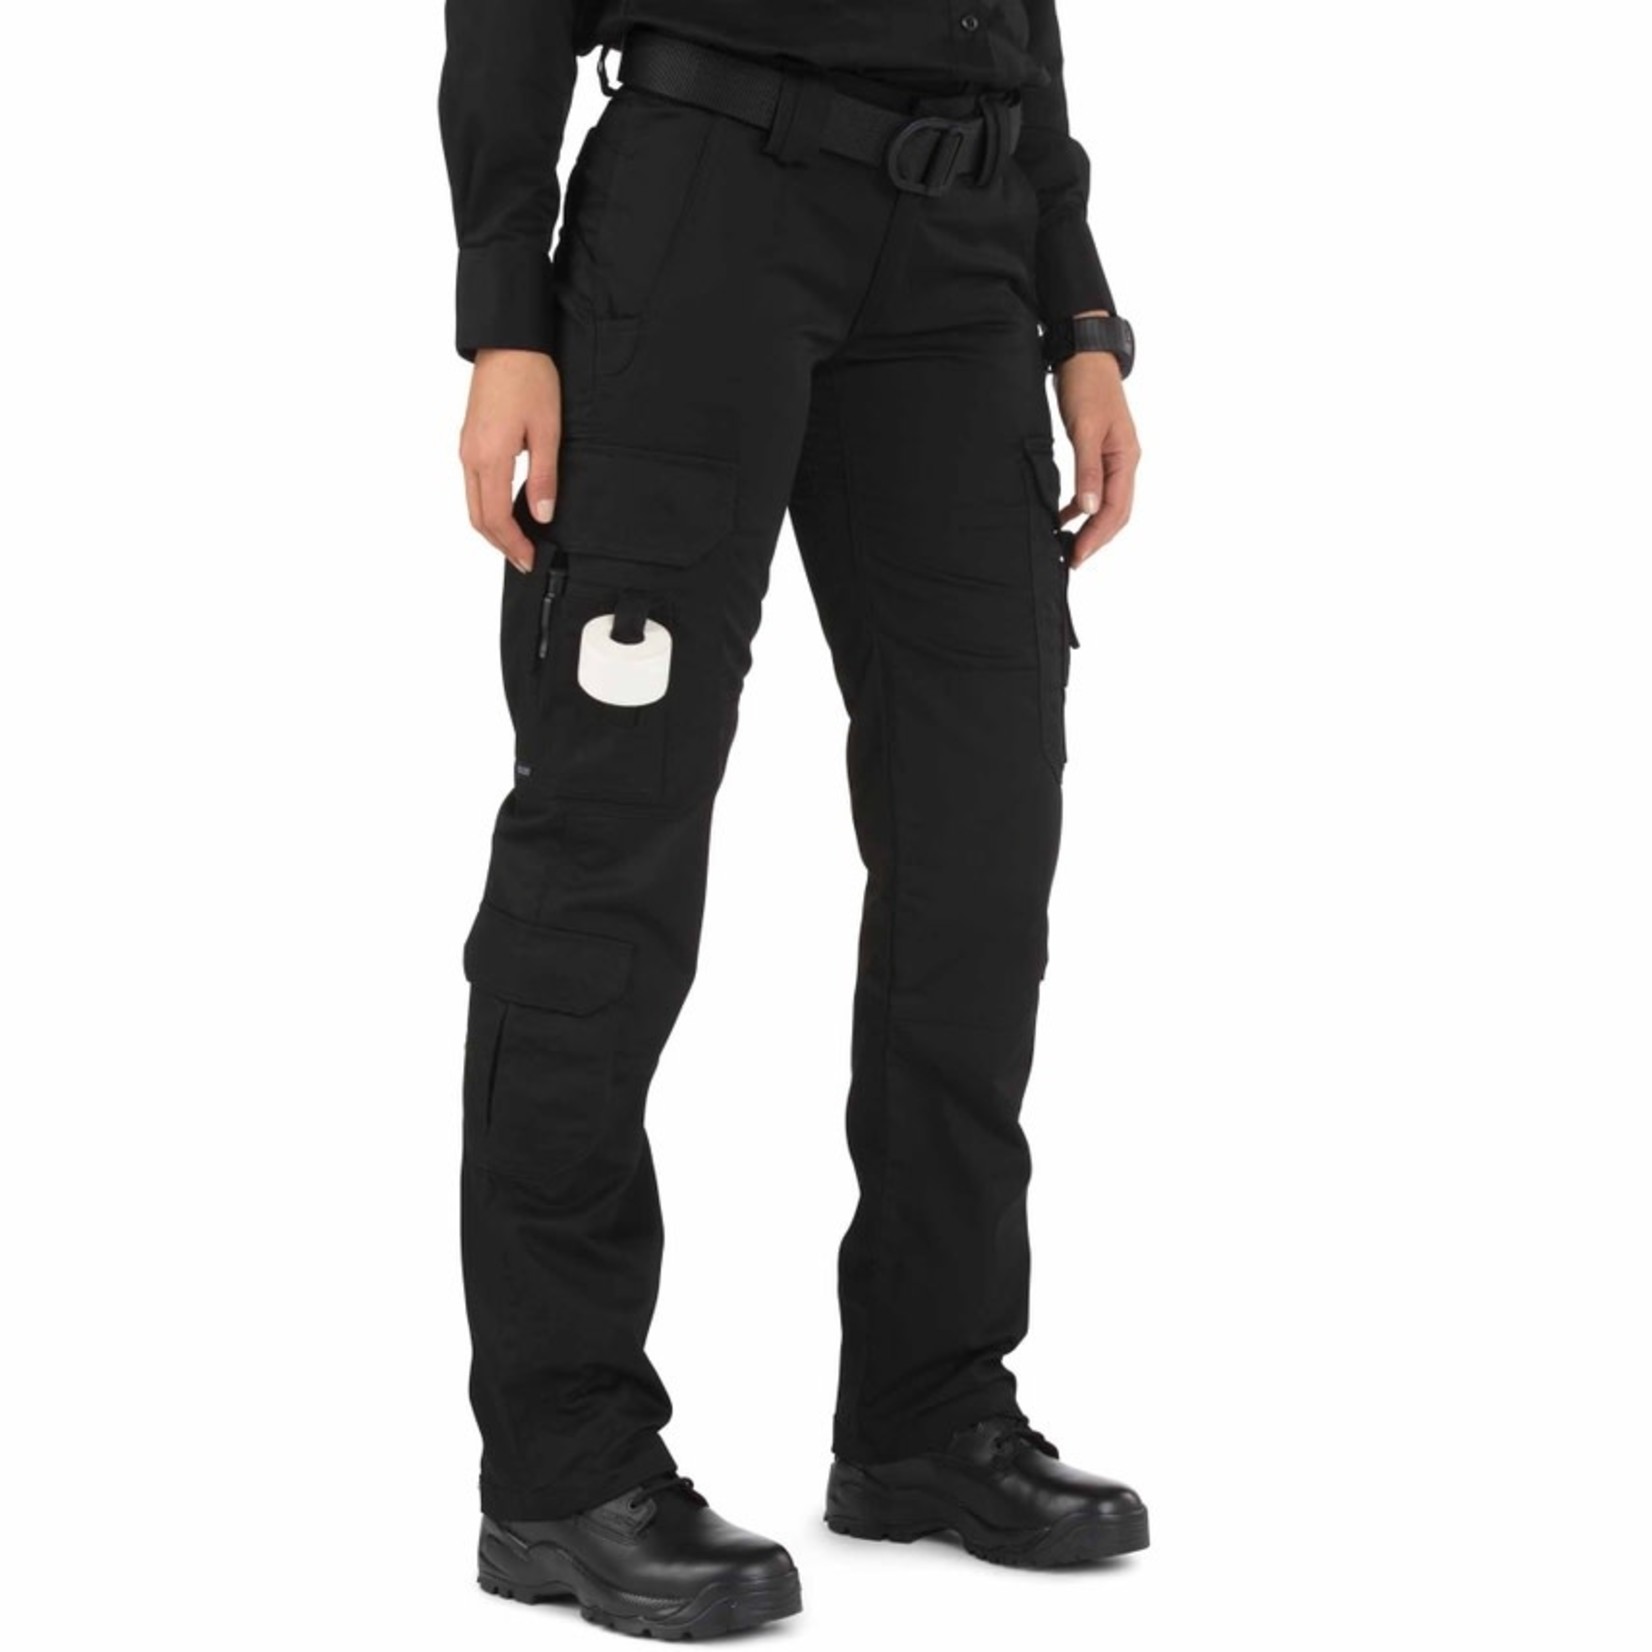 5.11 Tactical 5.11 Women's EMS Pants